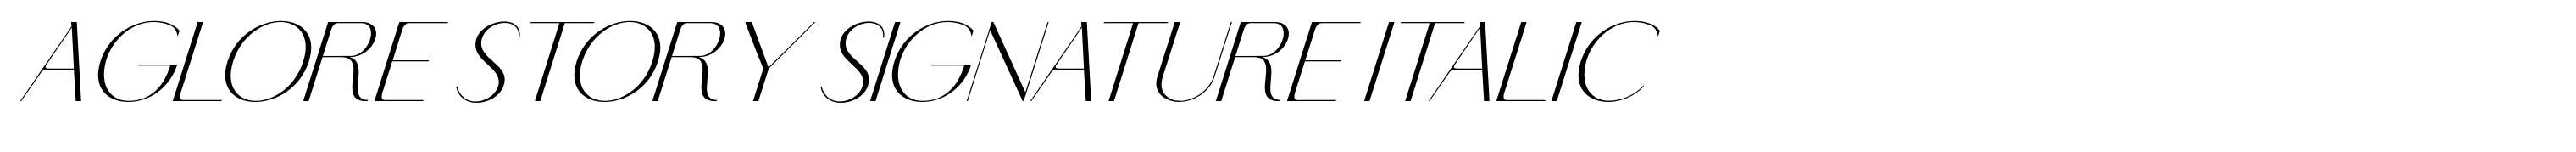 Aglore Story Signature Italic